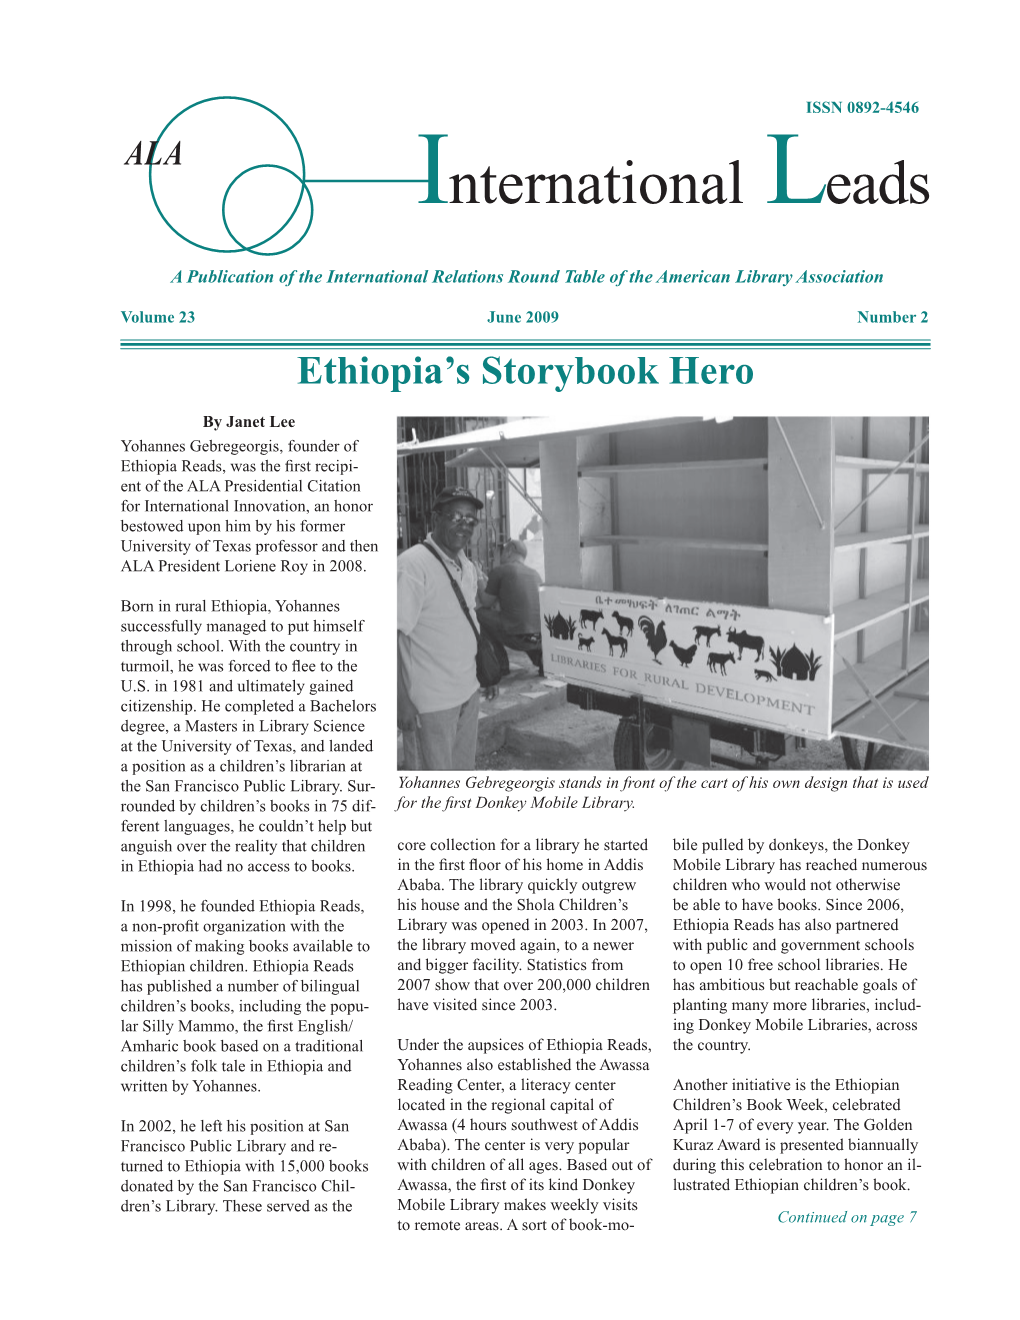 Ethiopia's Storybook Hero